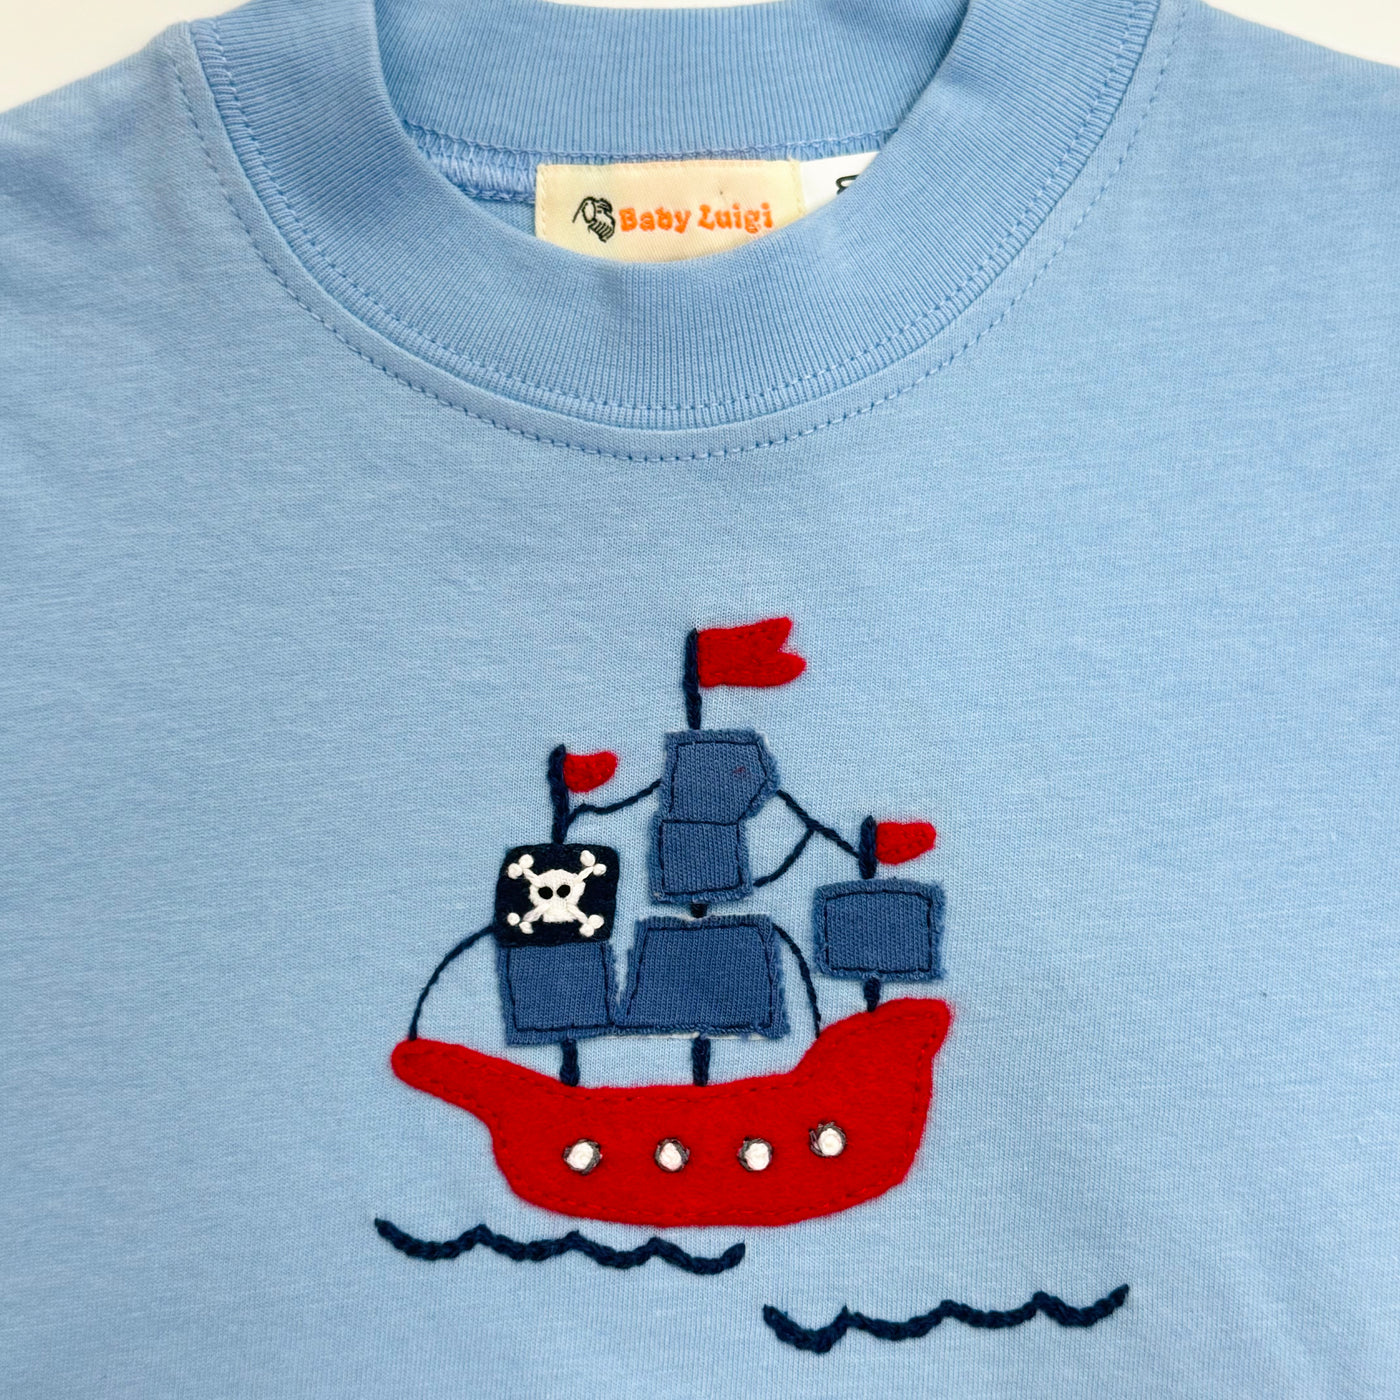 S/S Blue Pirate Ship T-Shirt